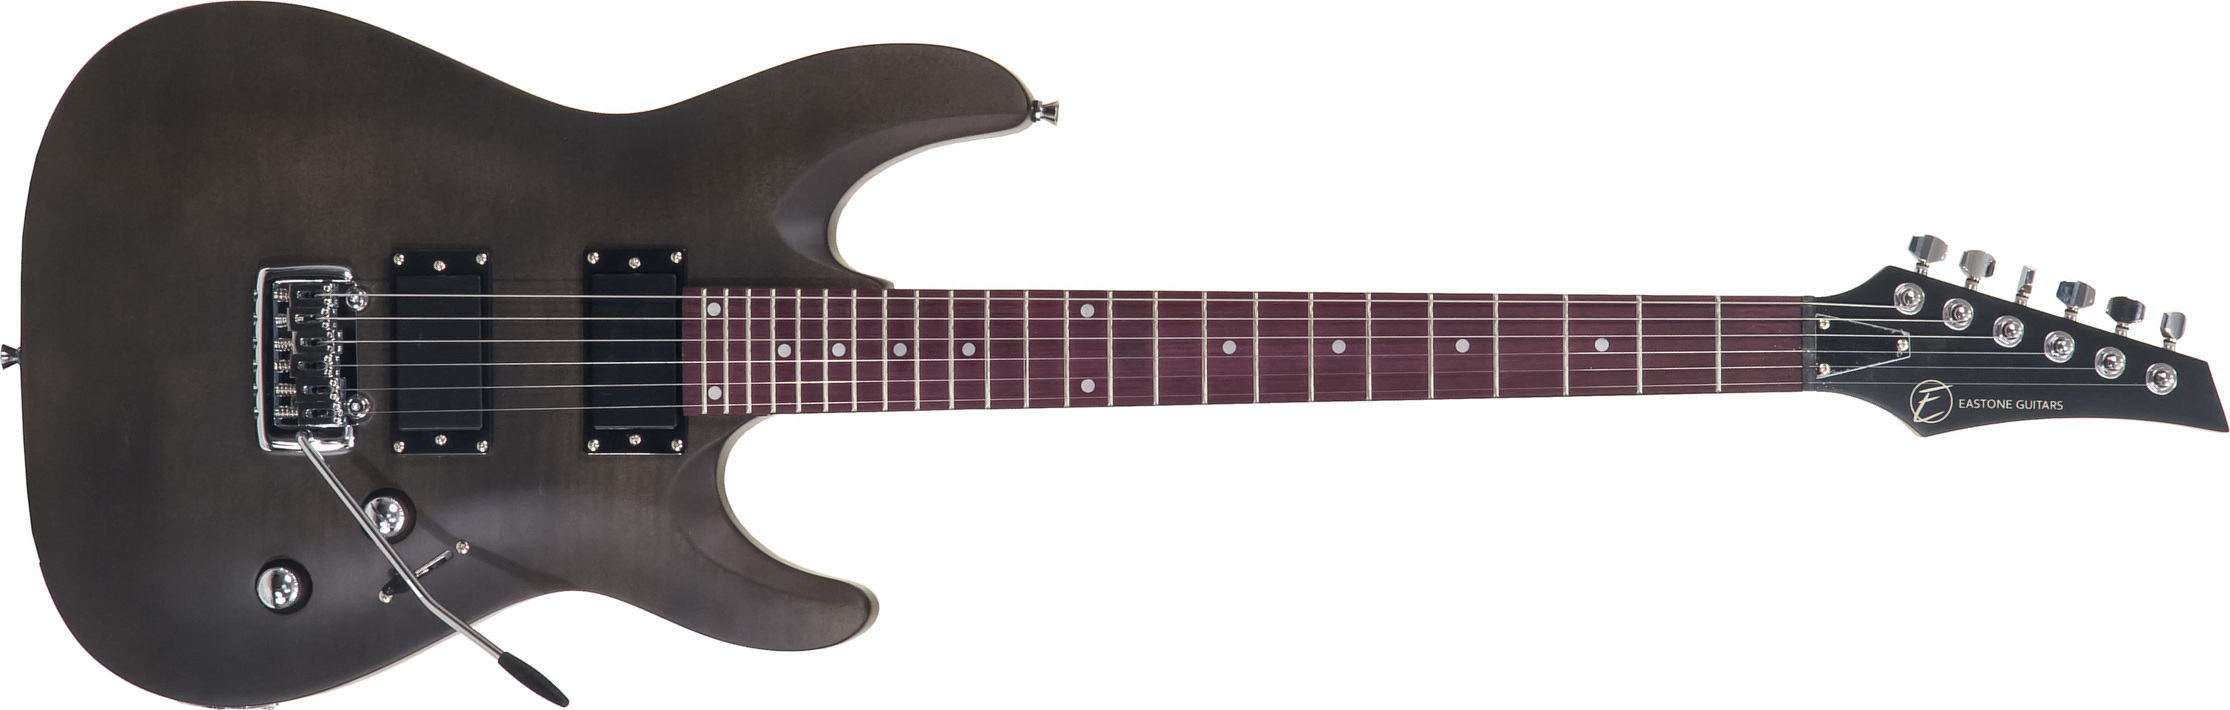 Eastone Metdc Hh Trem Pur - Black Satin - E-Gitarre in Str-Form - Main picture